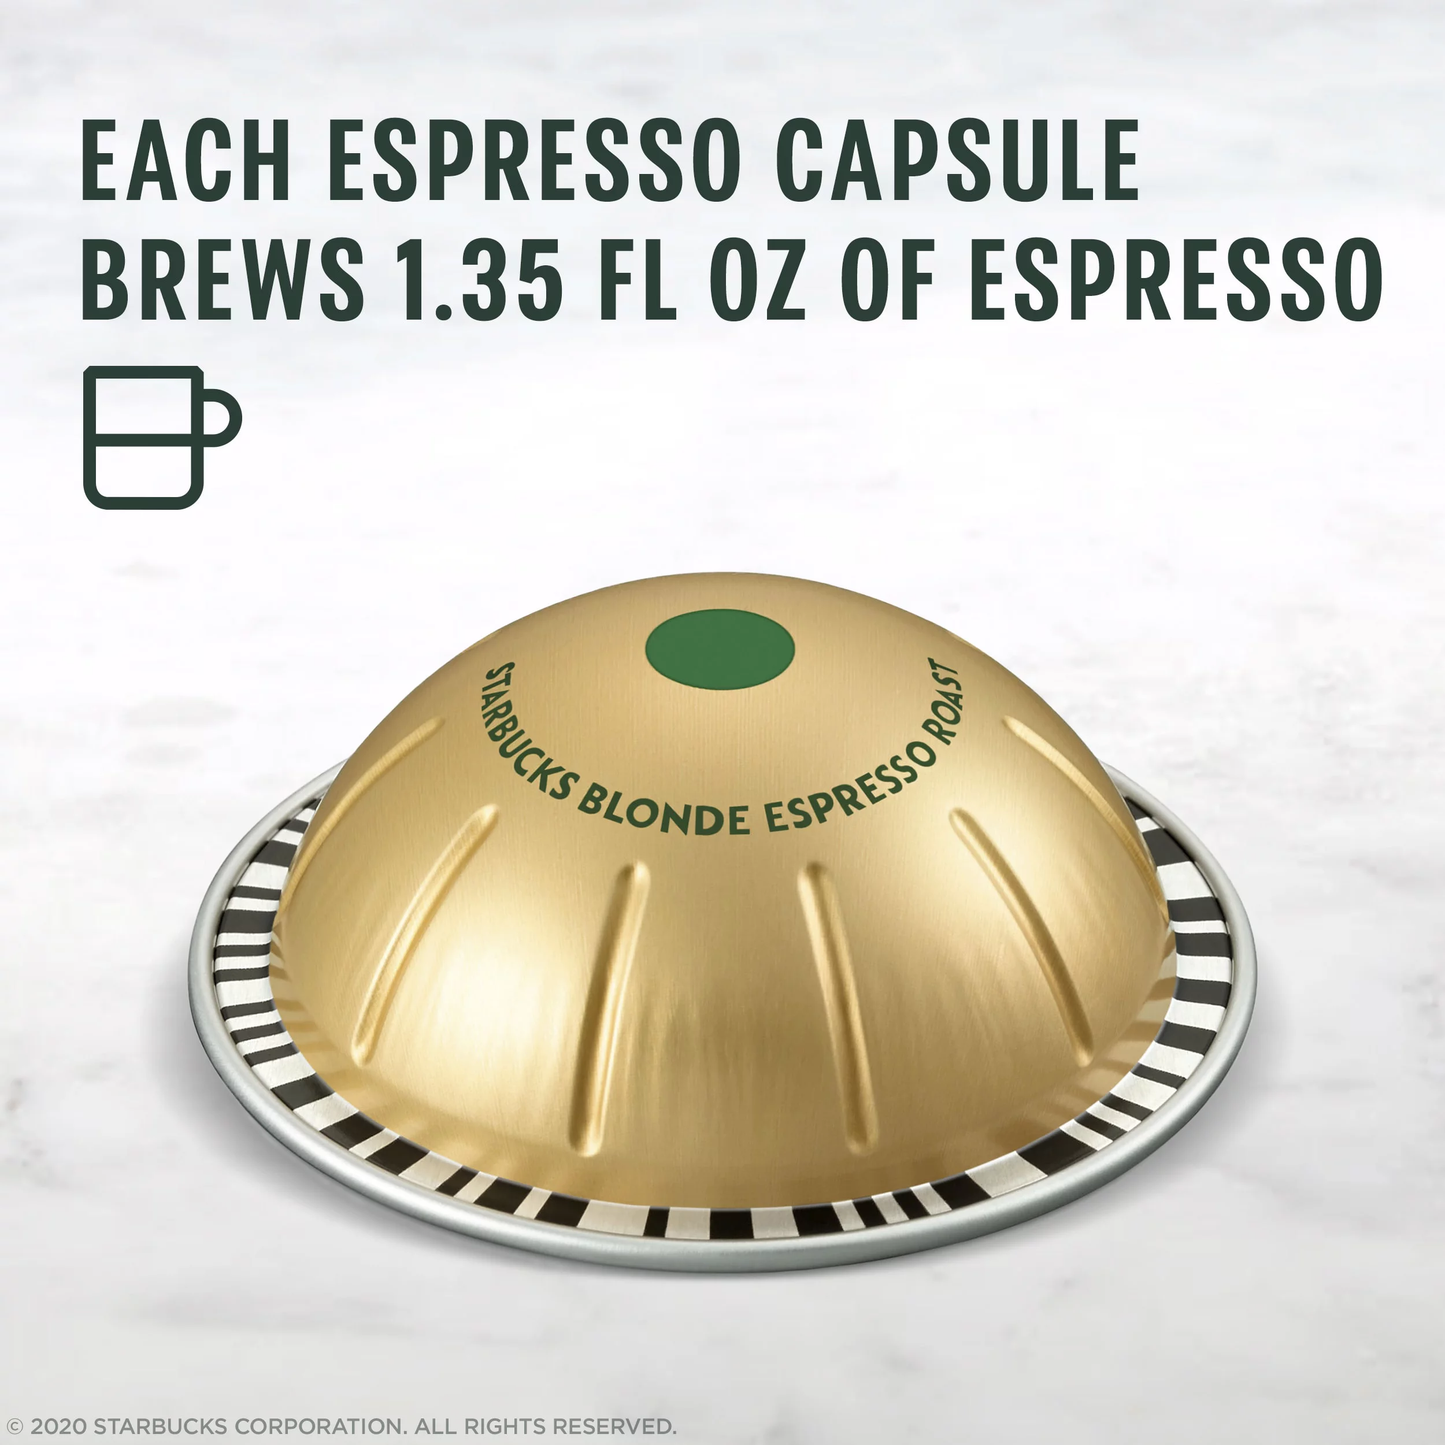 Starbucks® Blonde Espresso Roast for Nespresso® Vertuo (10 Pack)